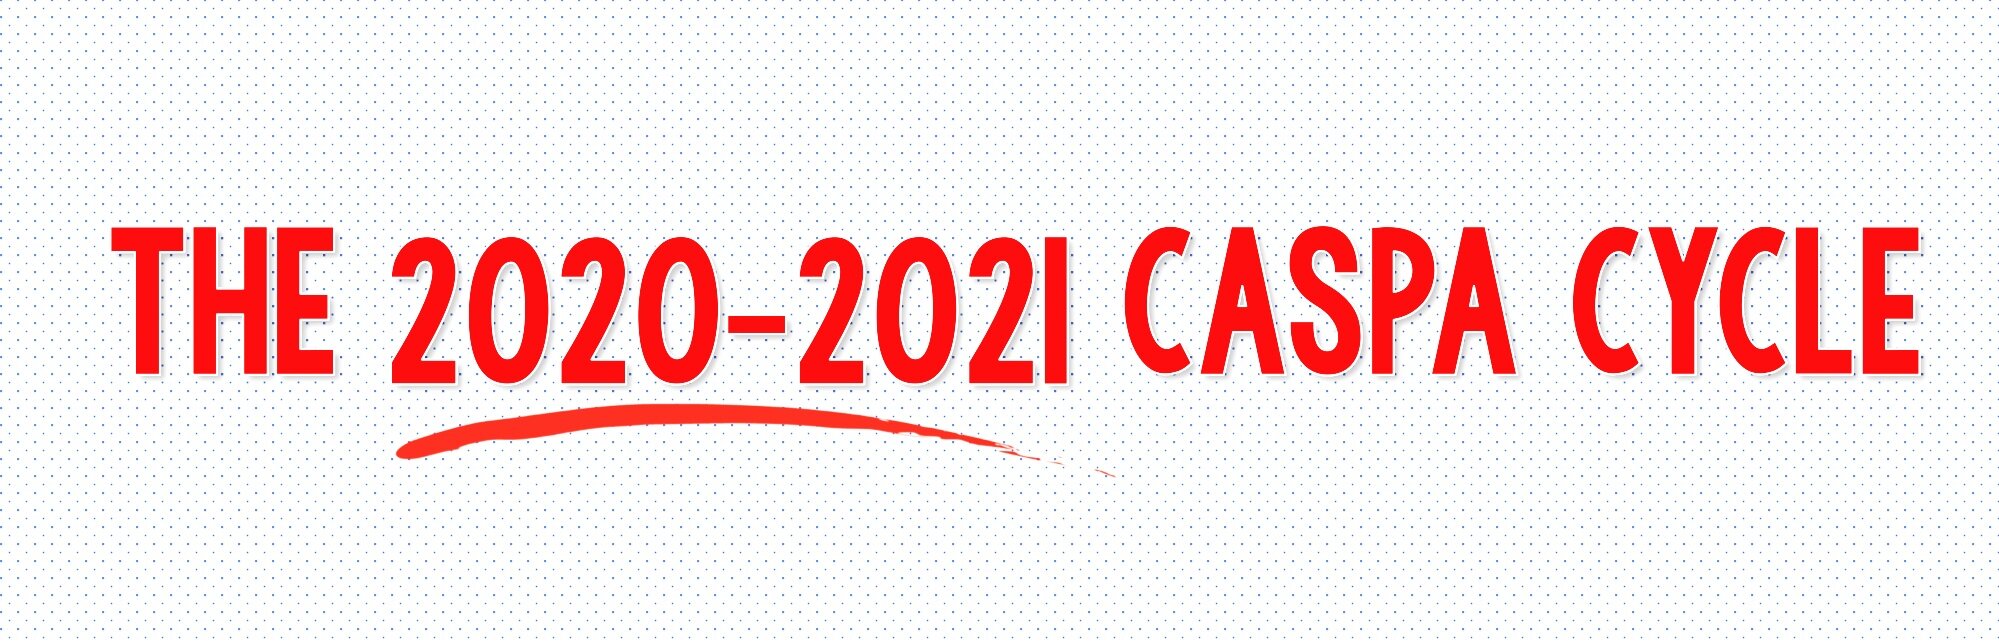 The 20202021 CASPA Cycle — My PA Resource